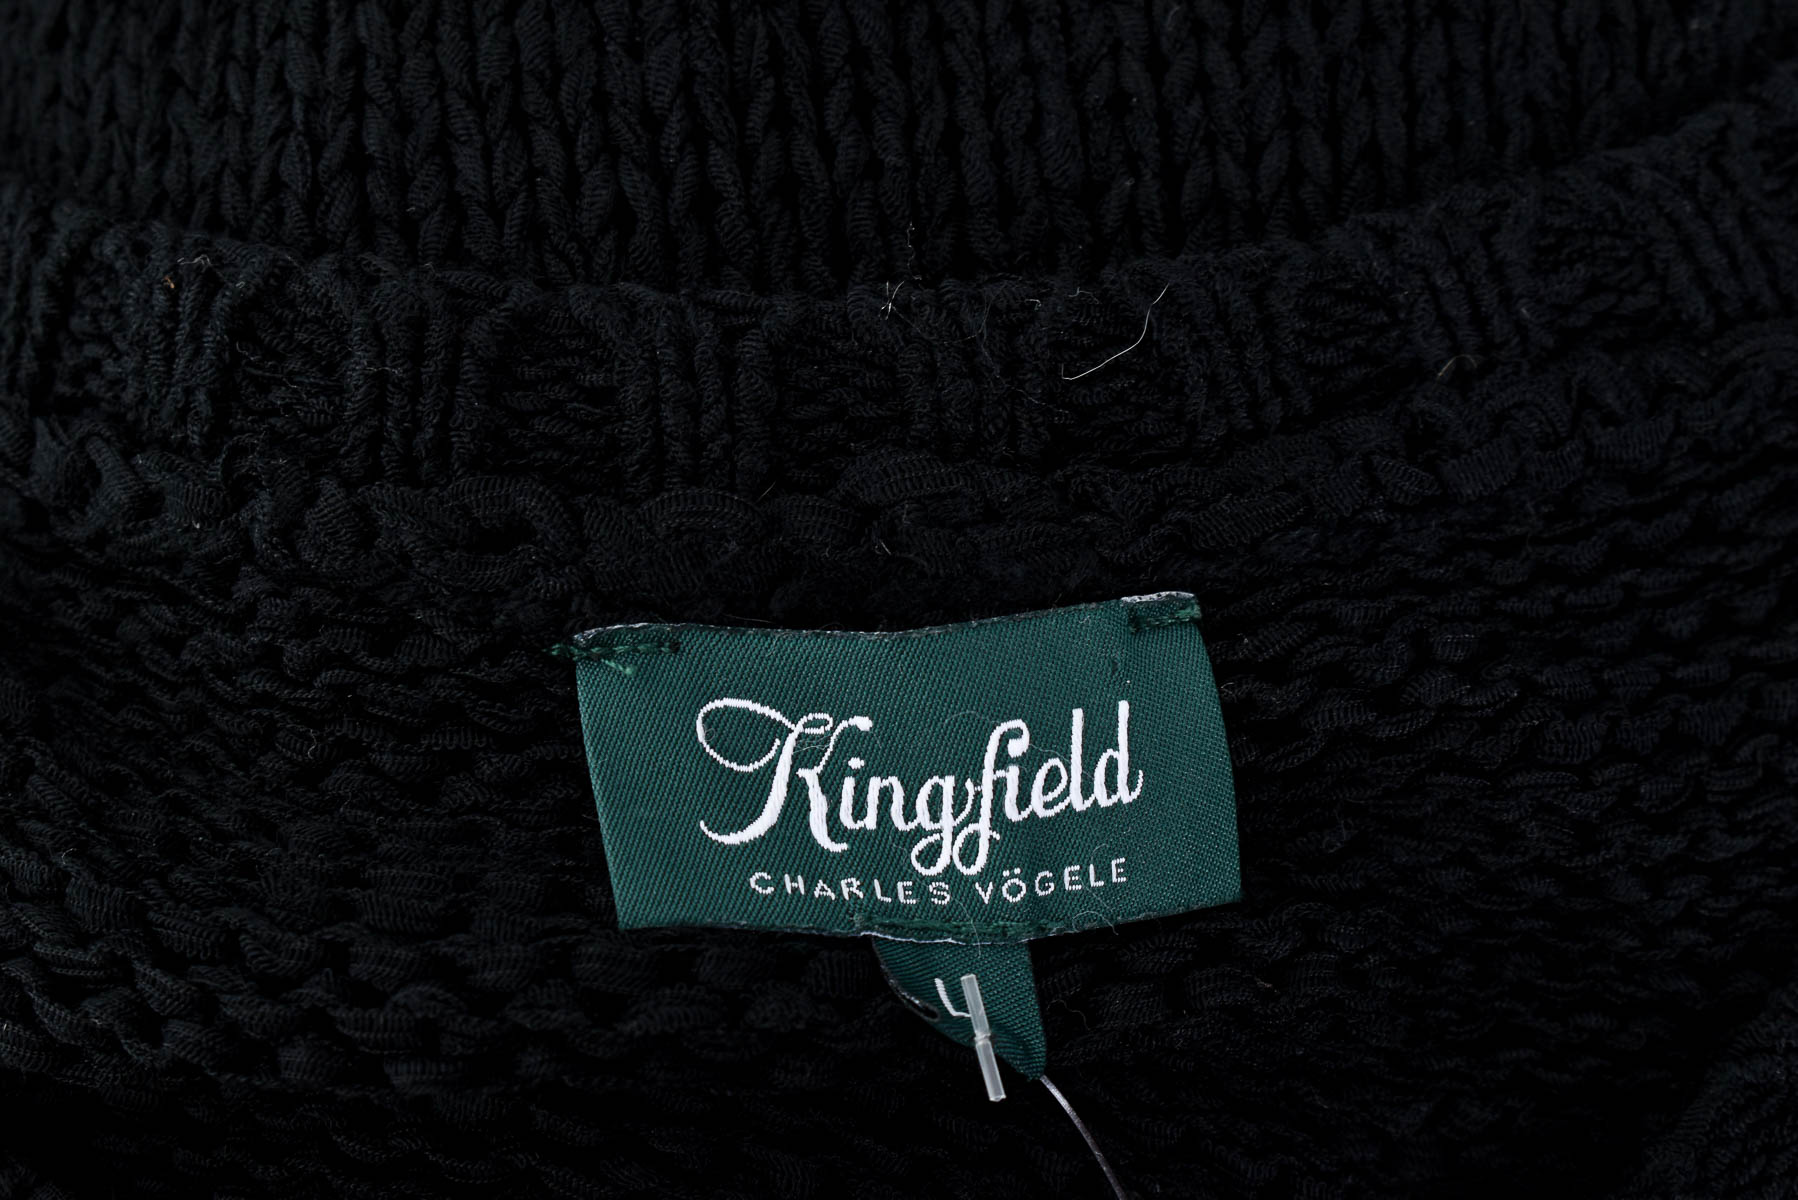 Cardigan / Jachetă de damă - Kingfield x Charles Vogele - 2